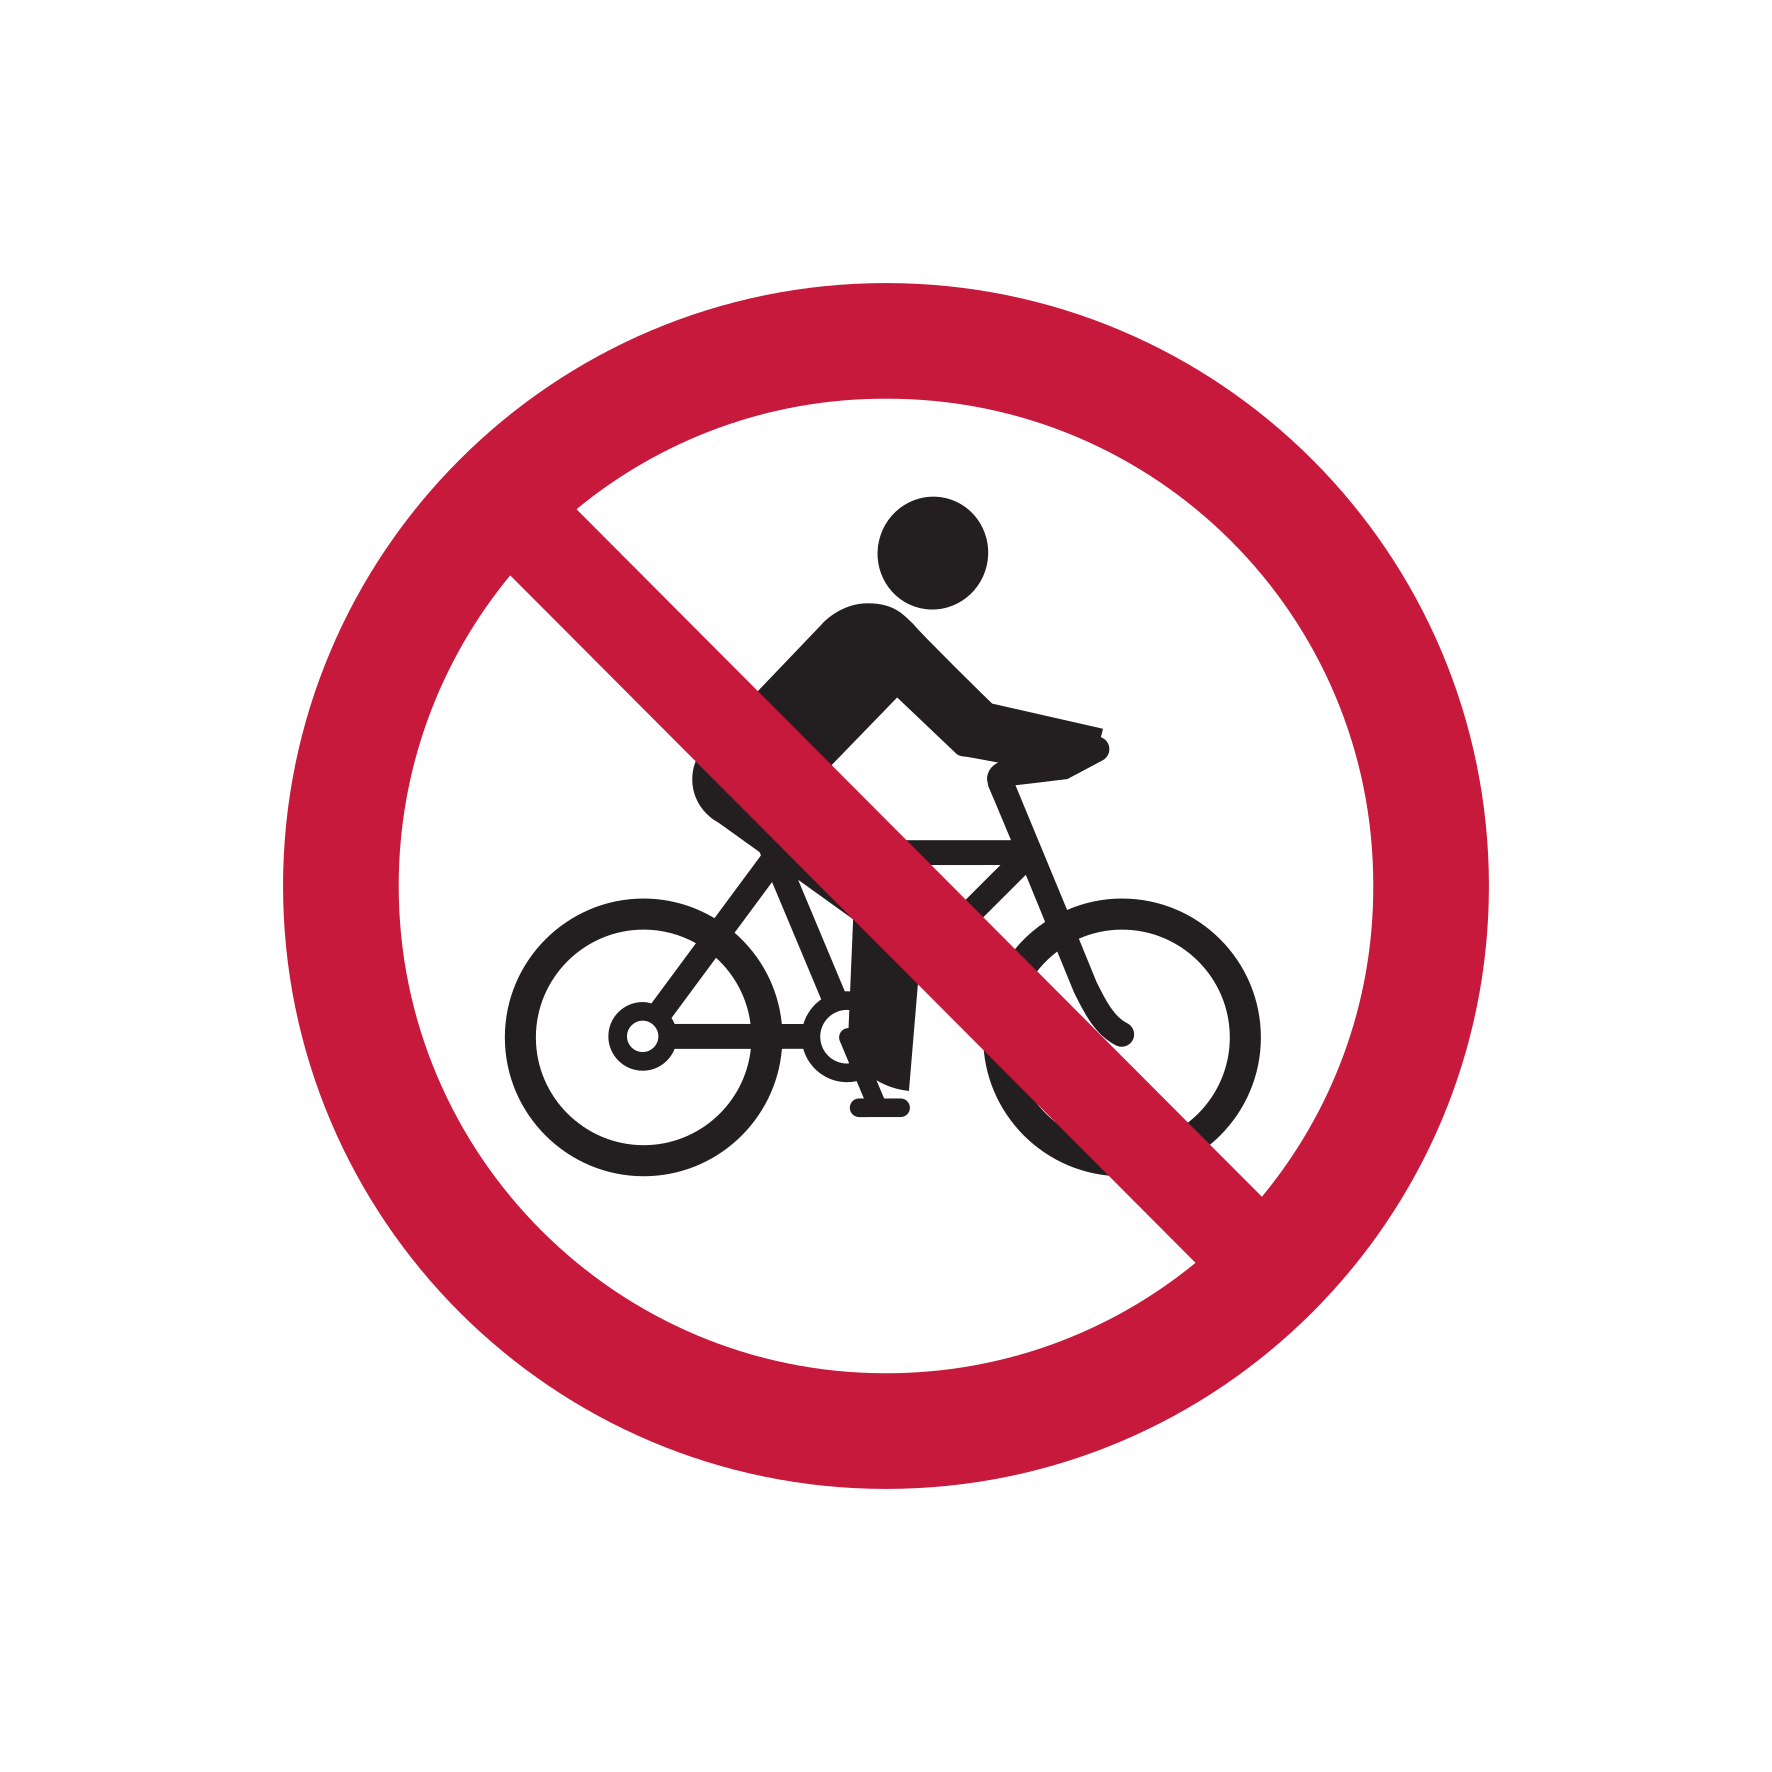 Vélo interdit, bike prohibited